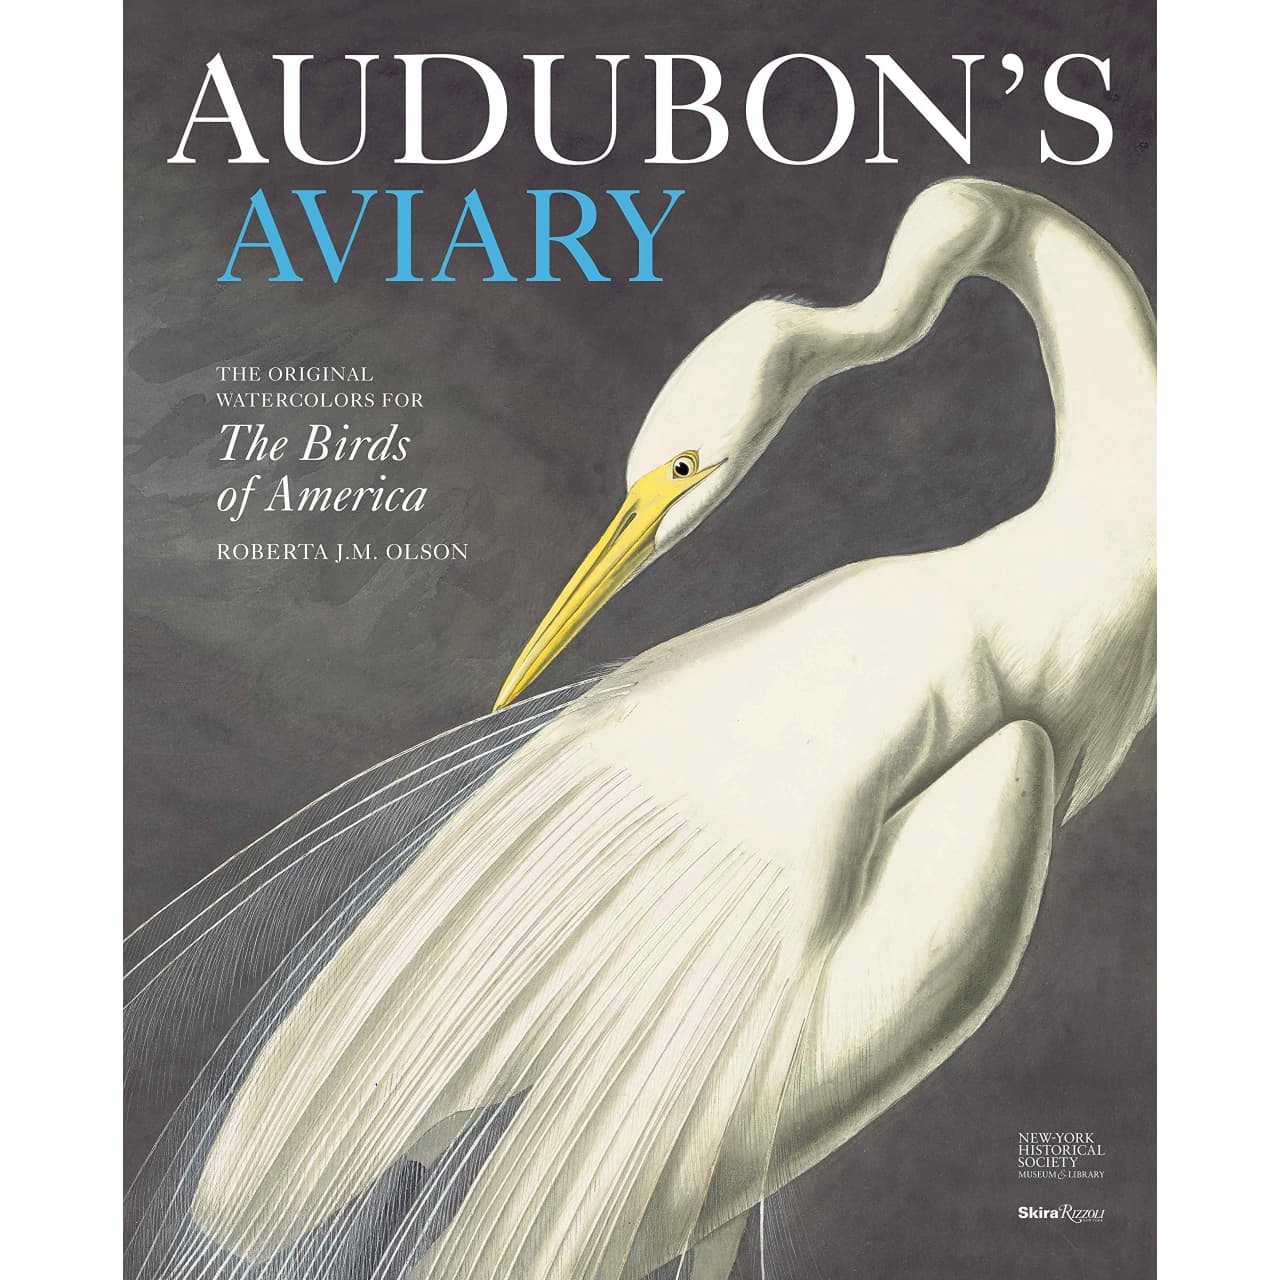 Audubon's Aviary: The Original Watercolors for The Birds of America 